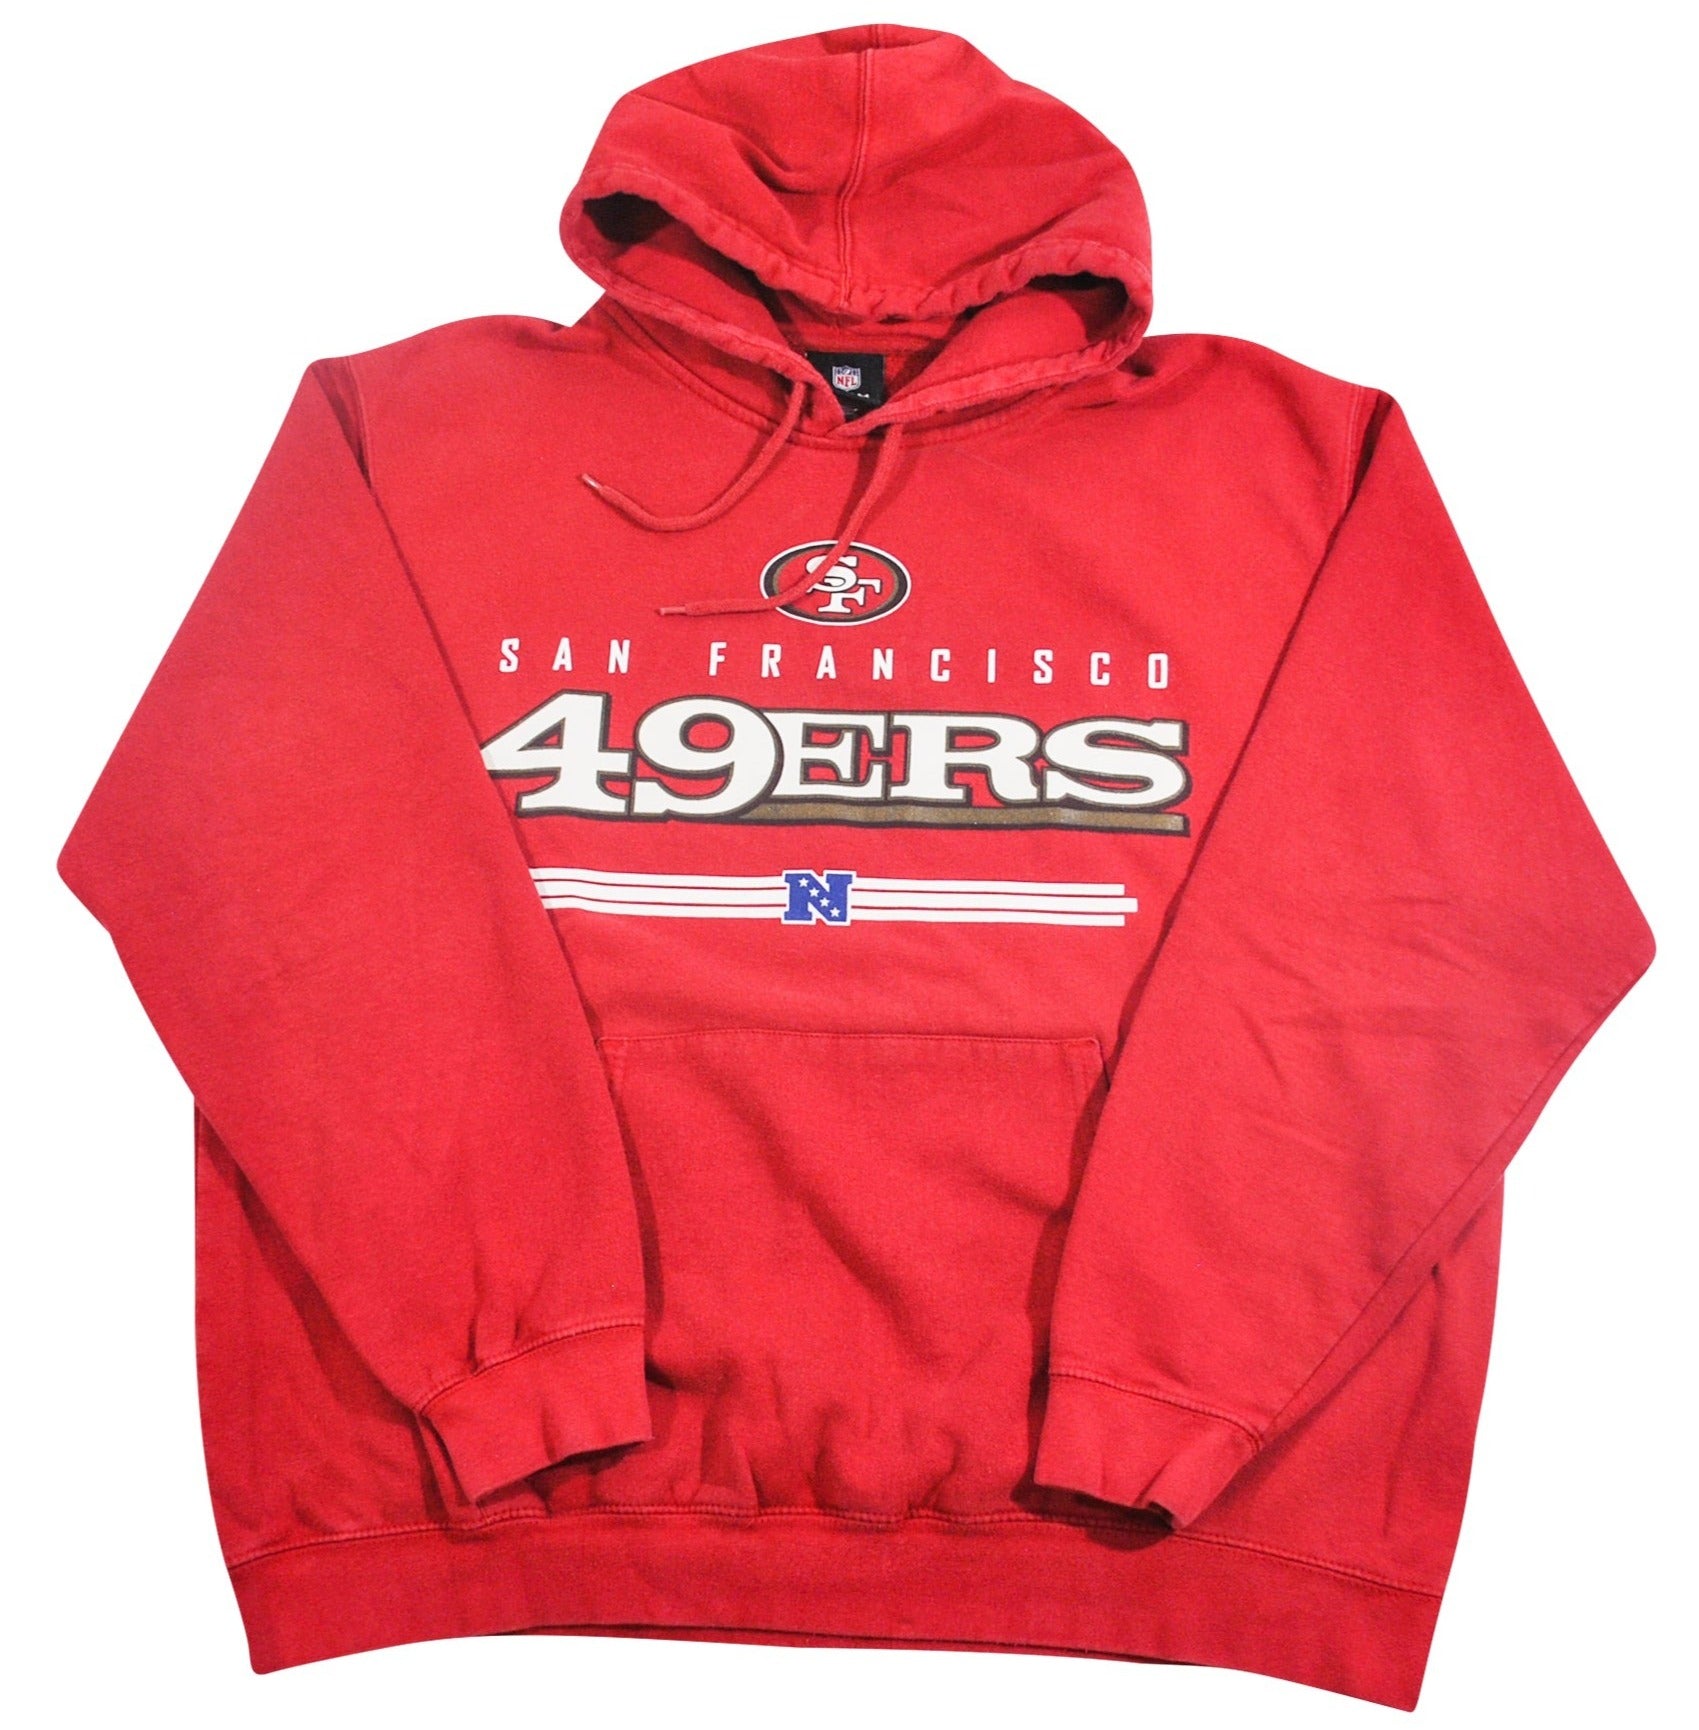 san francisco 49ers vintage sweatshirt - OFF-65% >Free Delivery